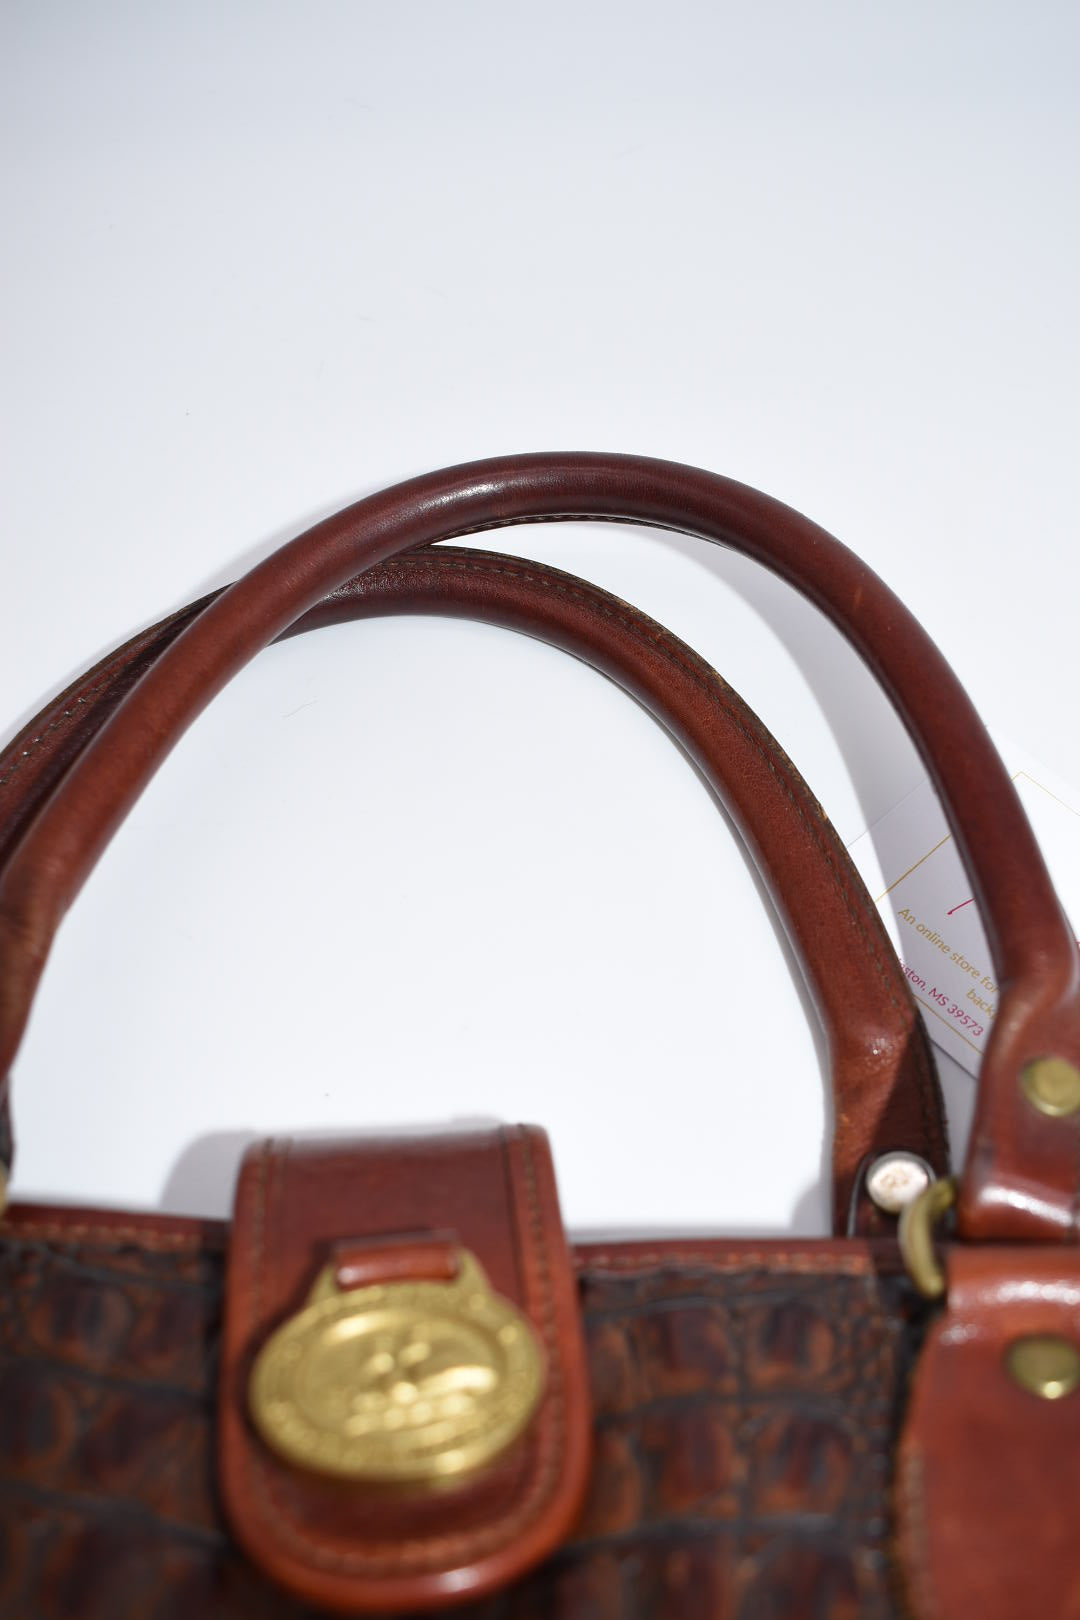 Brahmin Addison Satchel Bag in Croc Embossed Leather